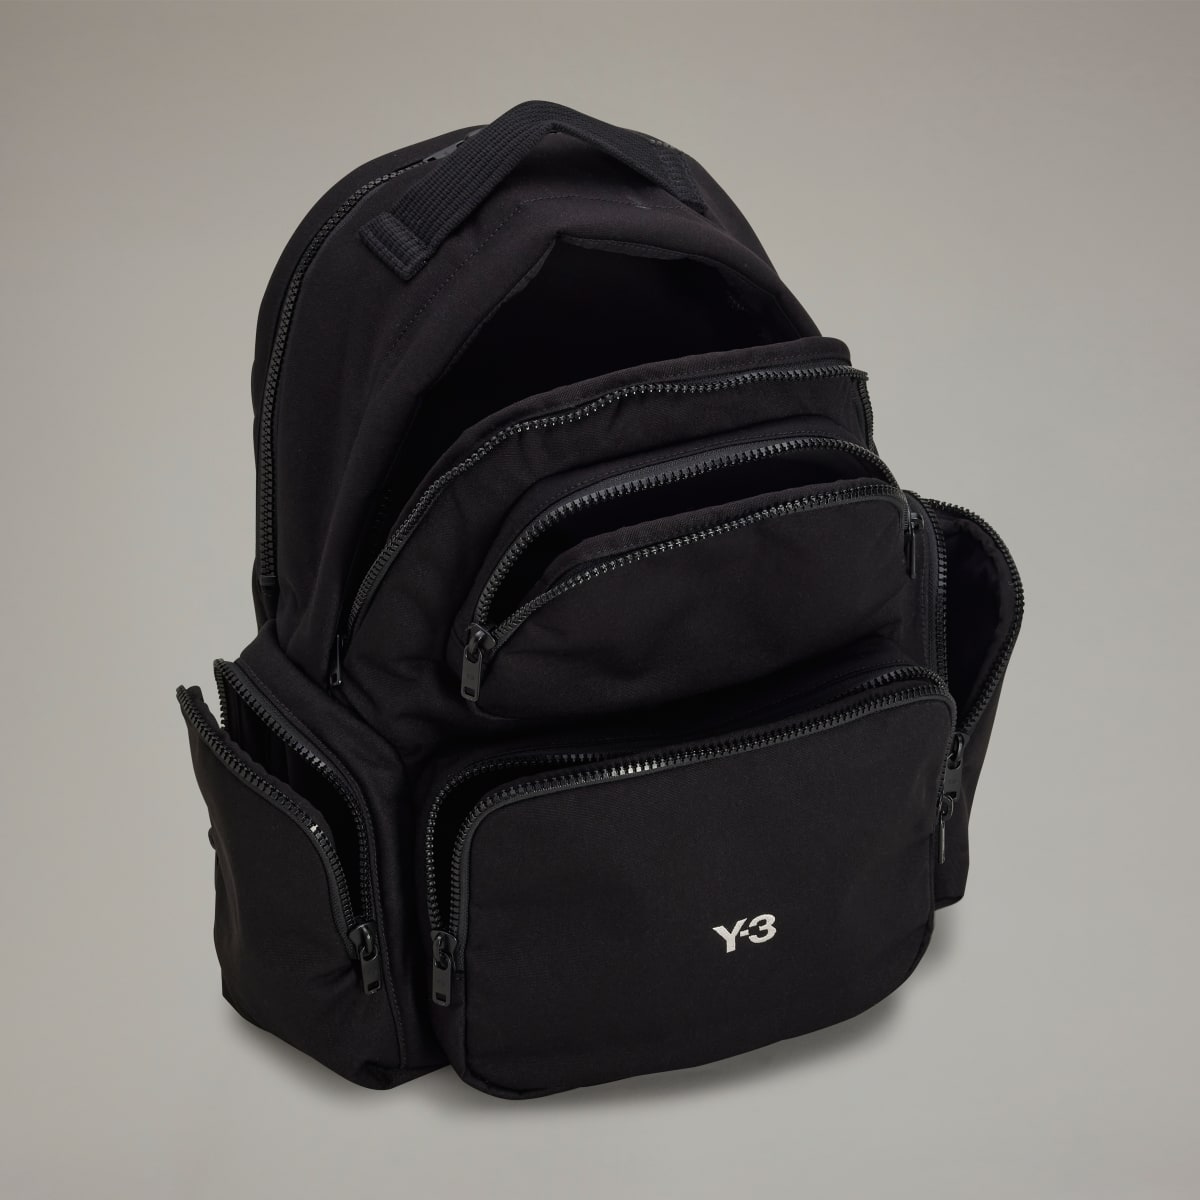 Adidas Y-3 Backpack. 5